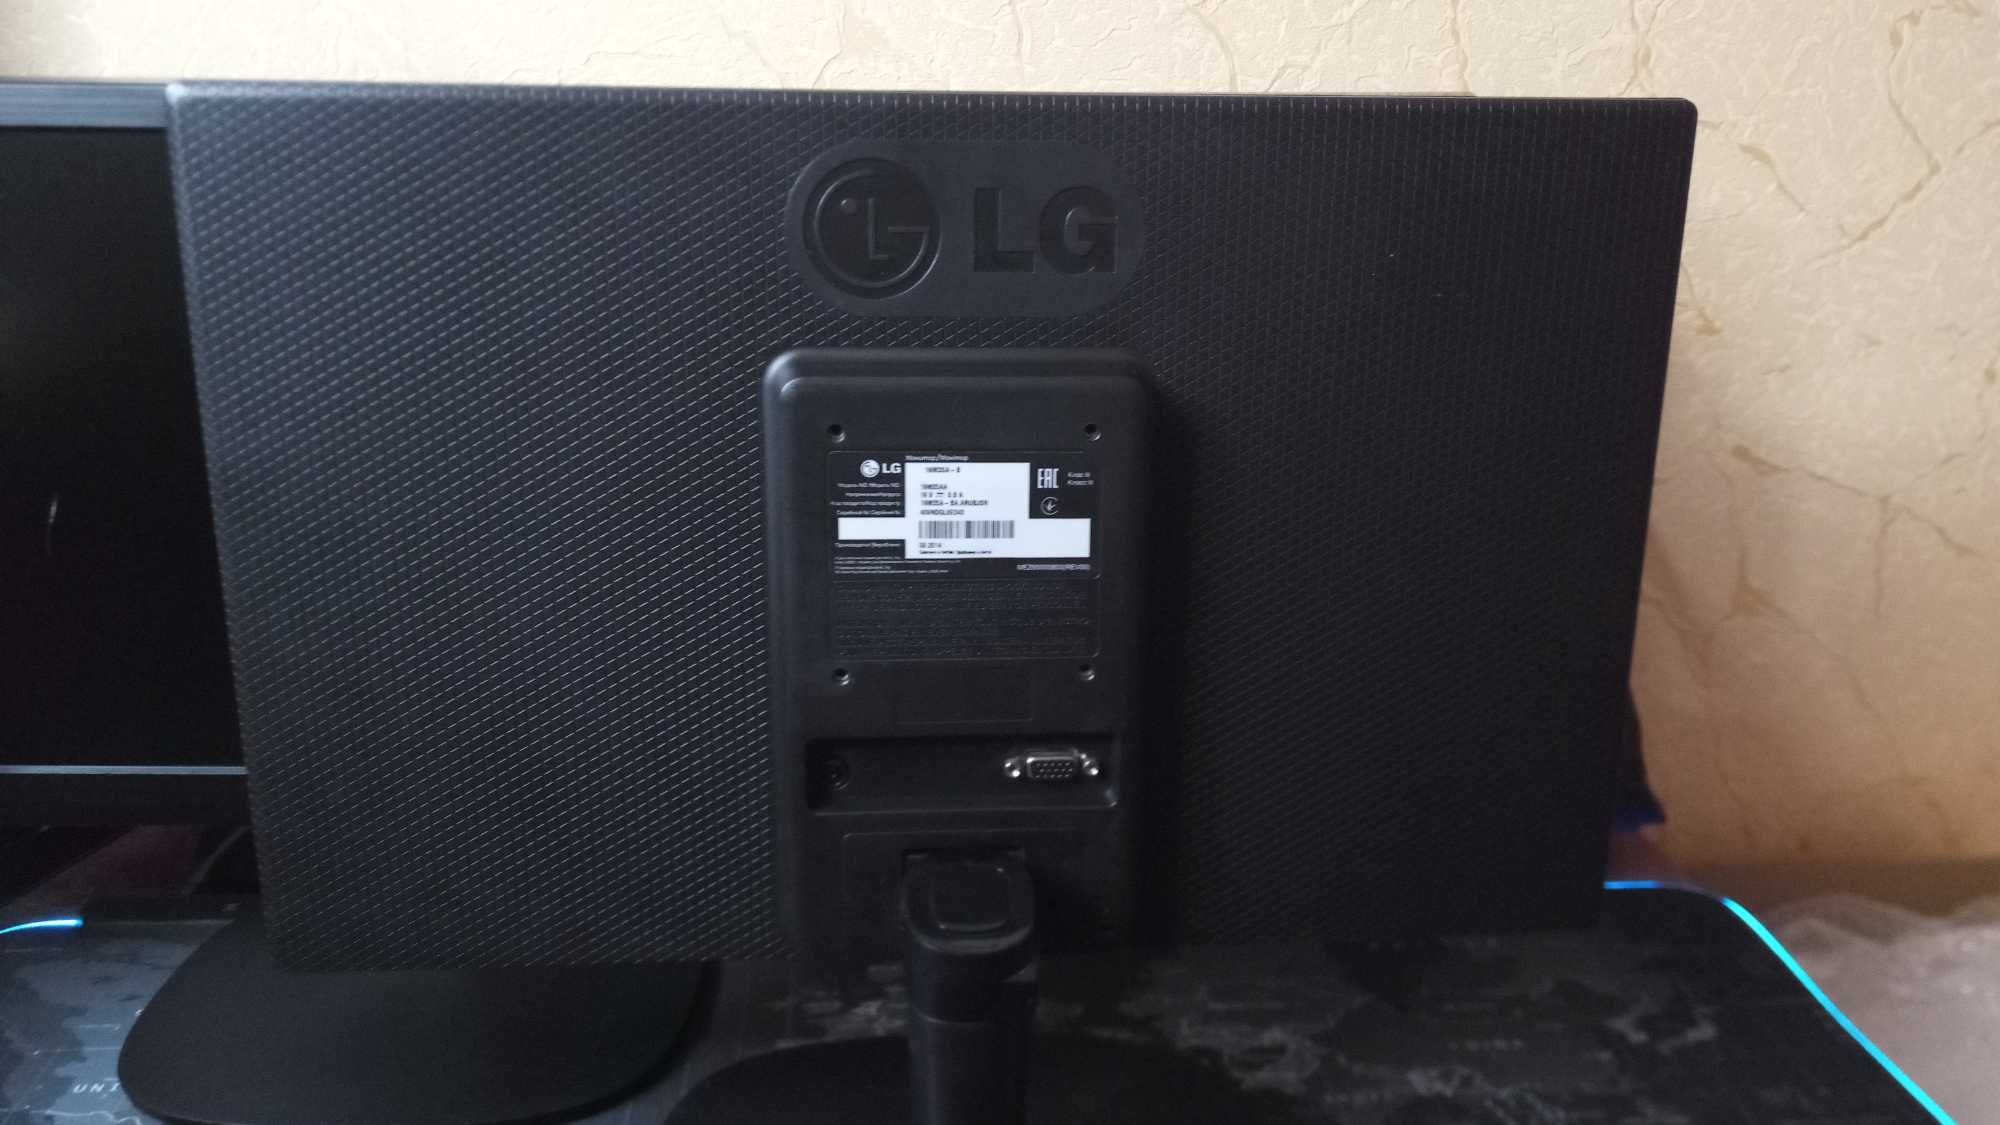 Vонитор 19 дюймов LG 19M35A-B